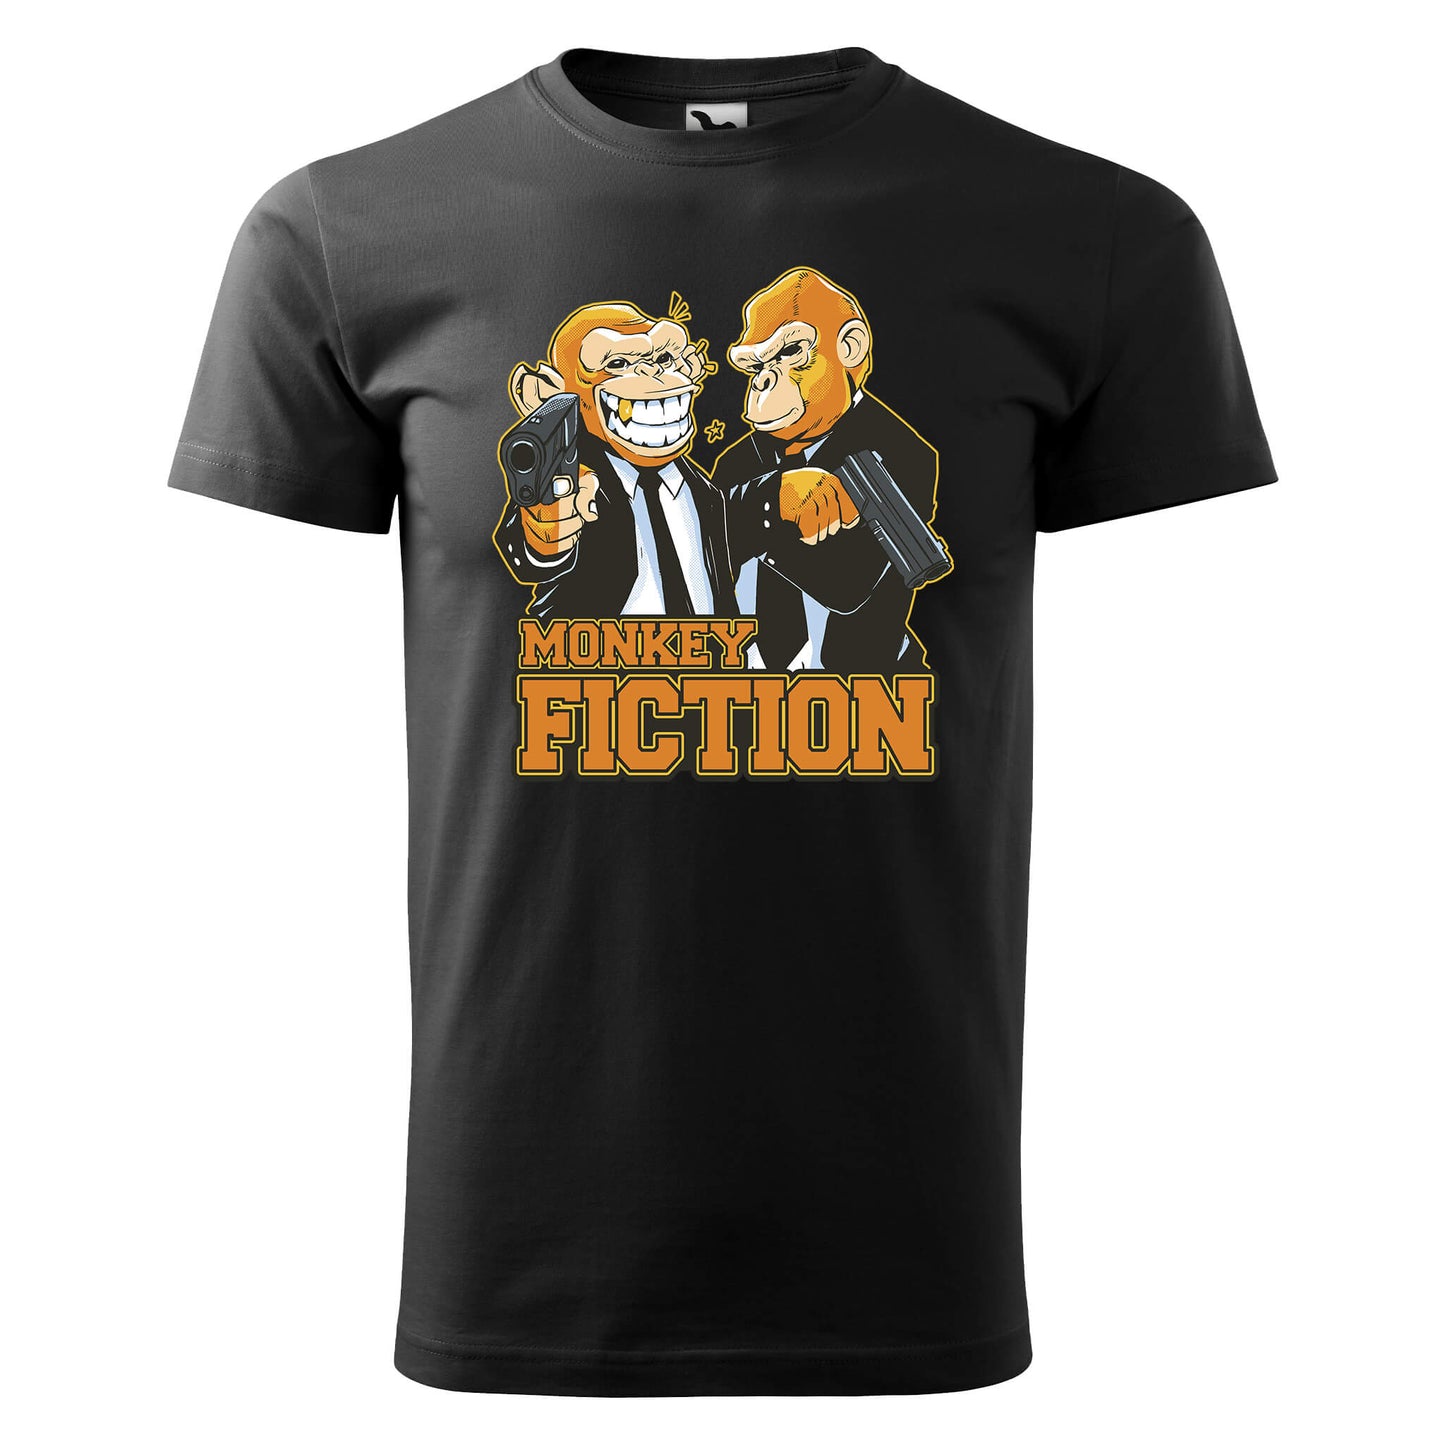 Monkey fiction t-shirt - rvdesignprint